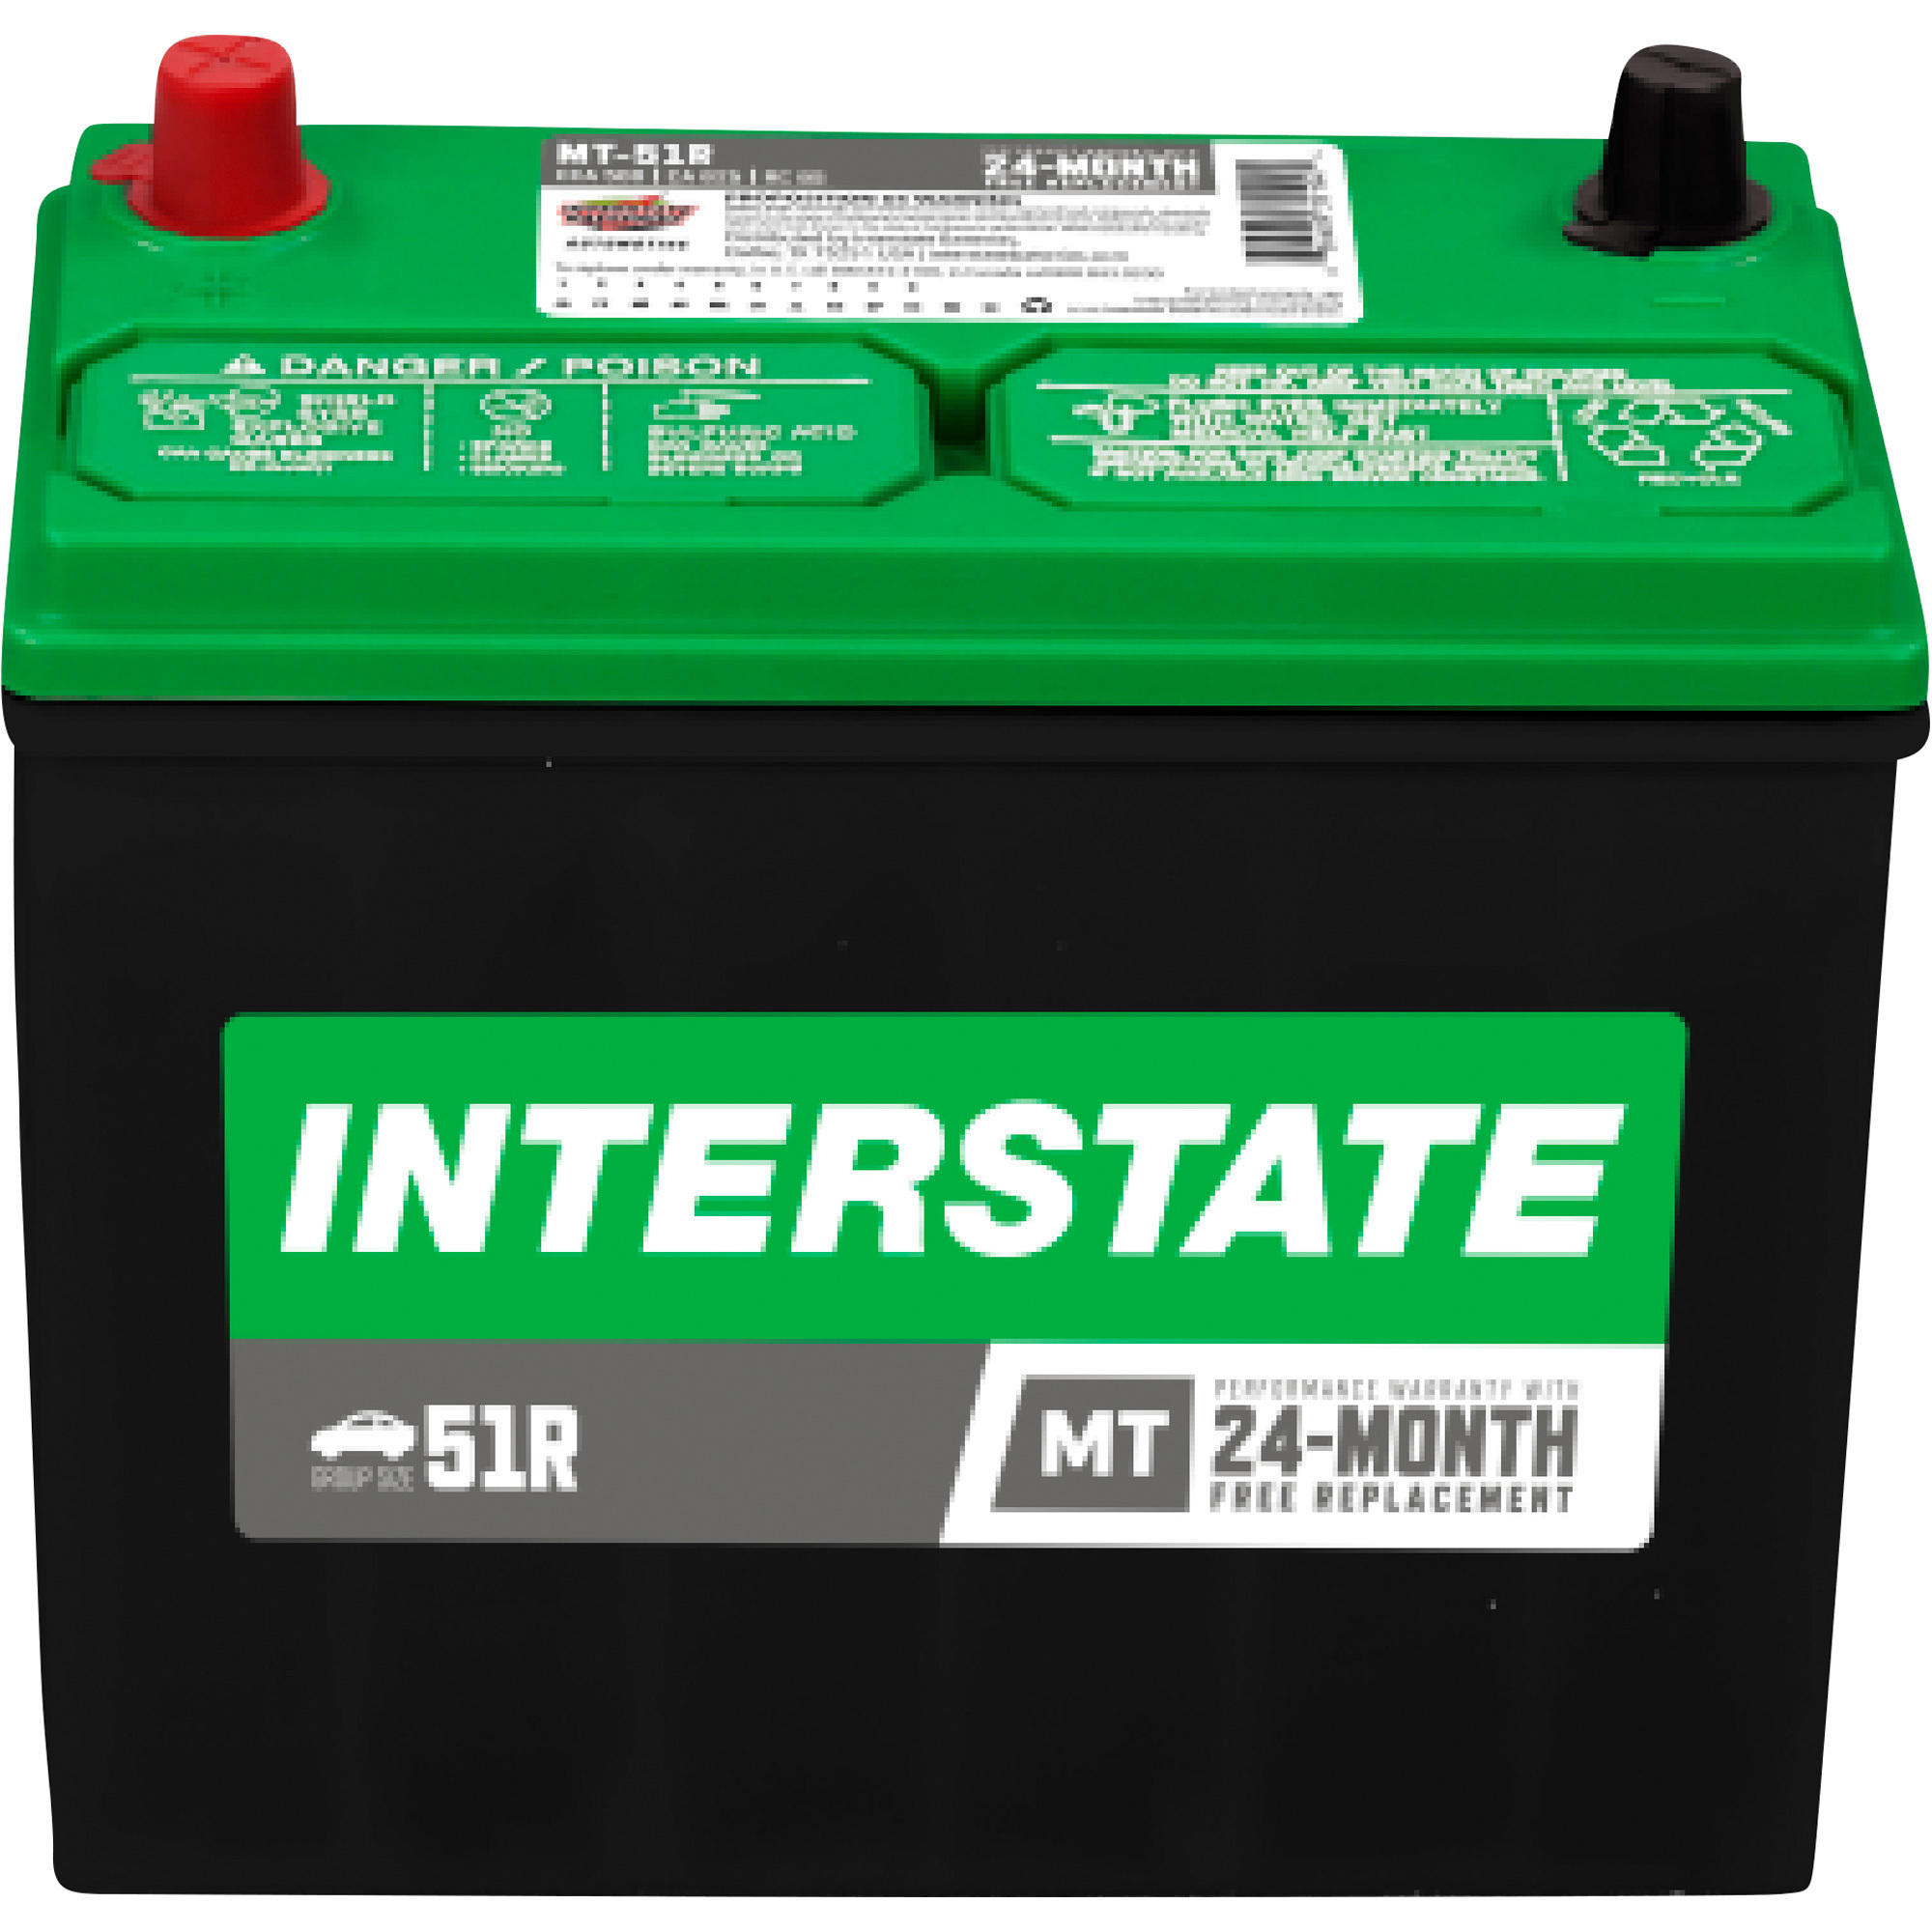 Interstate Batteries Automotive Battery, Group Size 51R, 12 Volt, Sealed Lead Acid, Model MT-51R